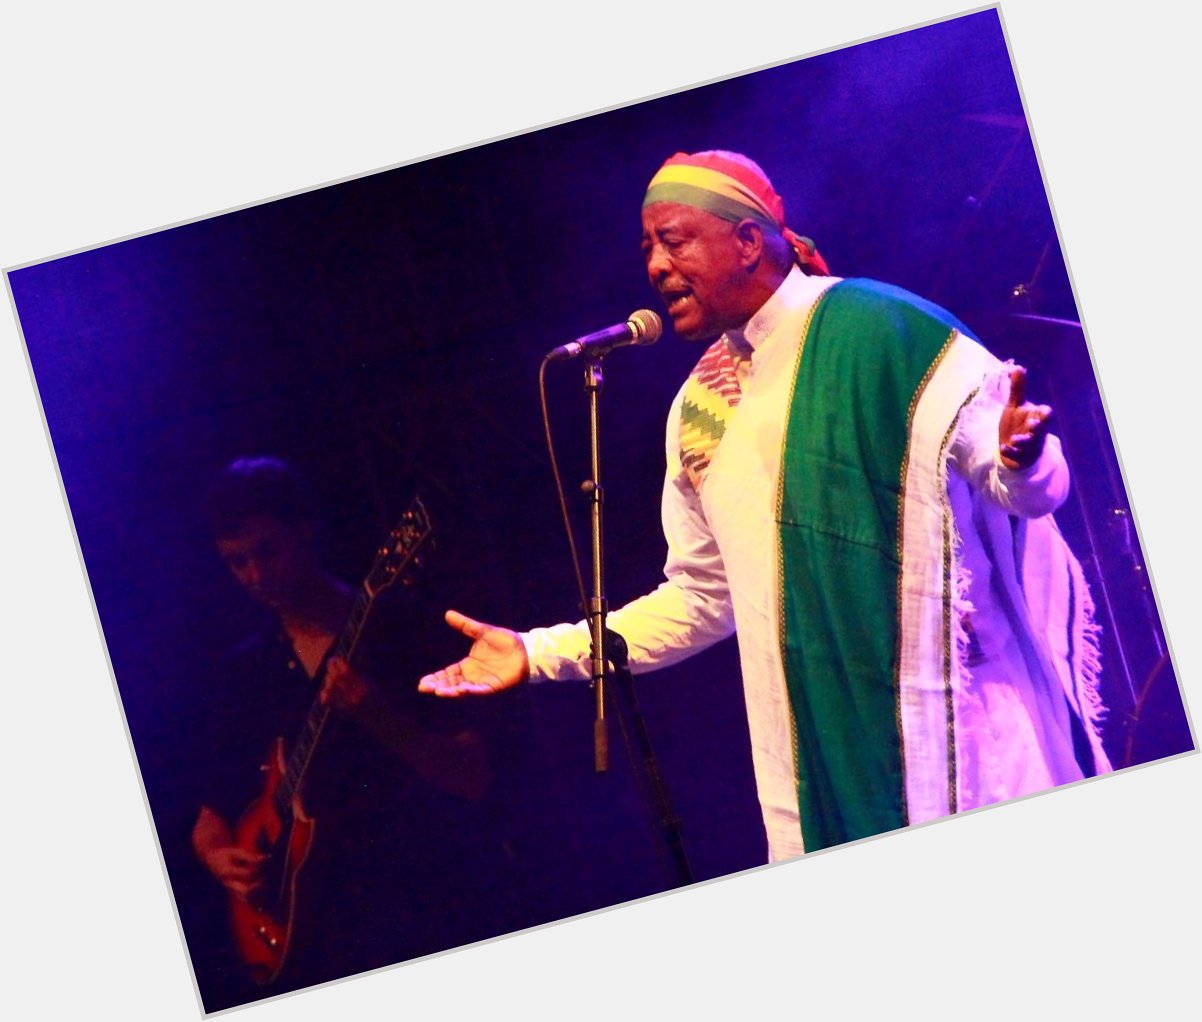 Wishing a happy birthday to the  legendary Ethiopian singer himself Mahmoud Ahmed! 